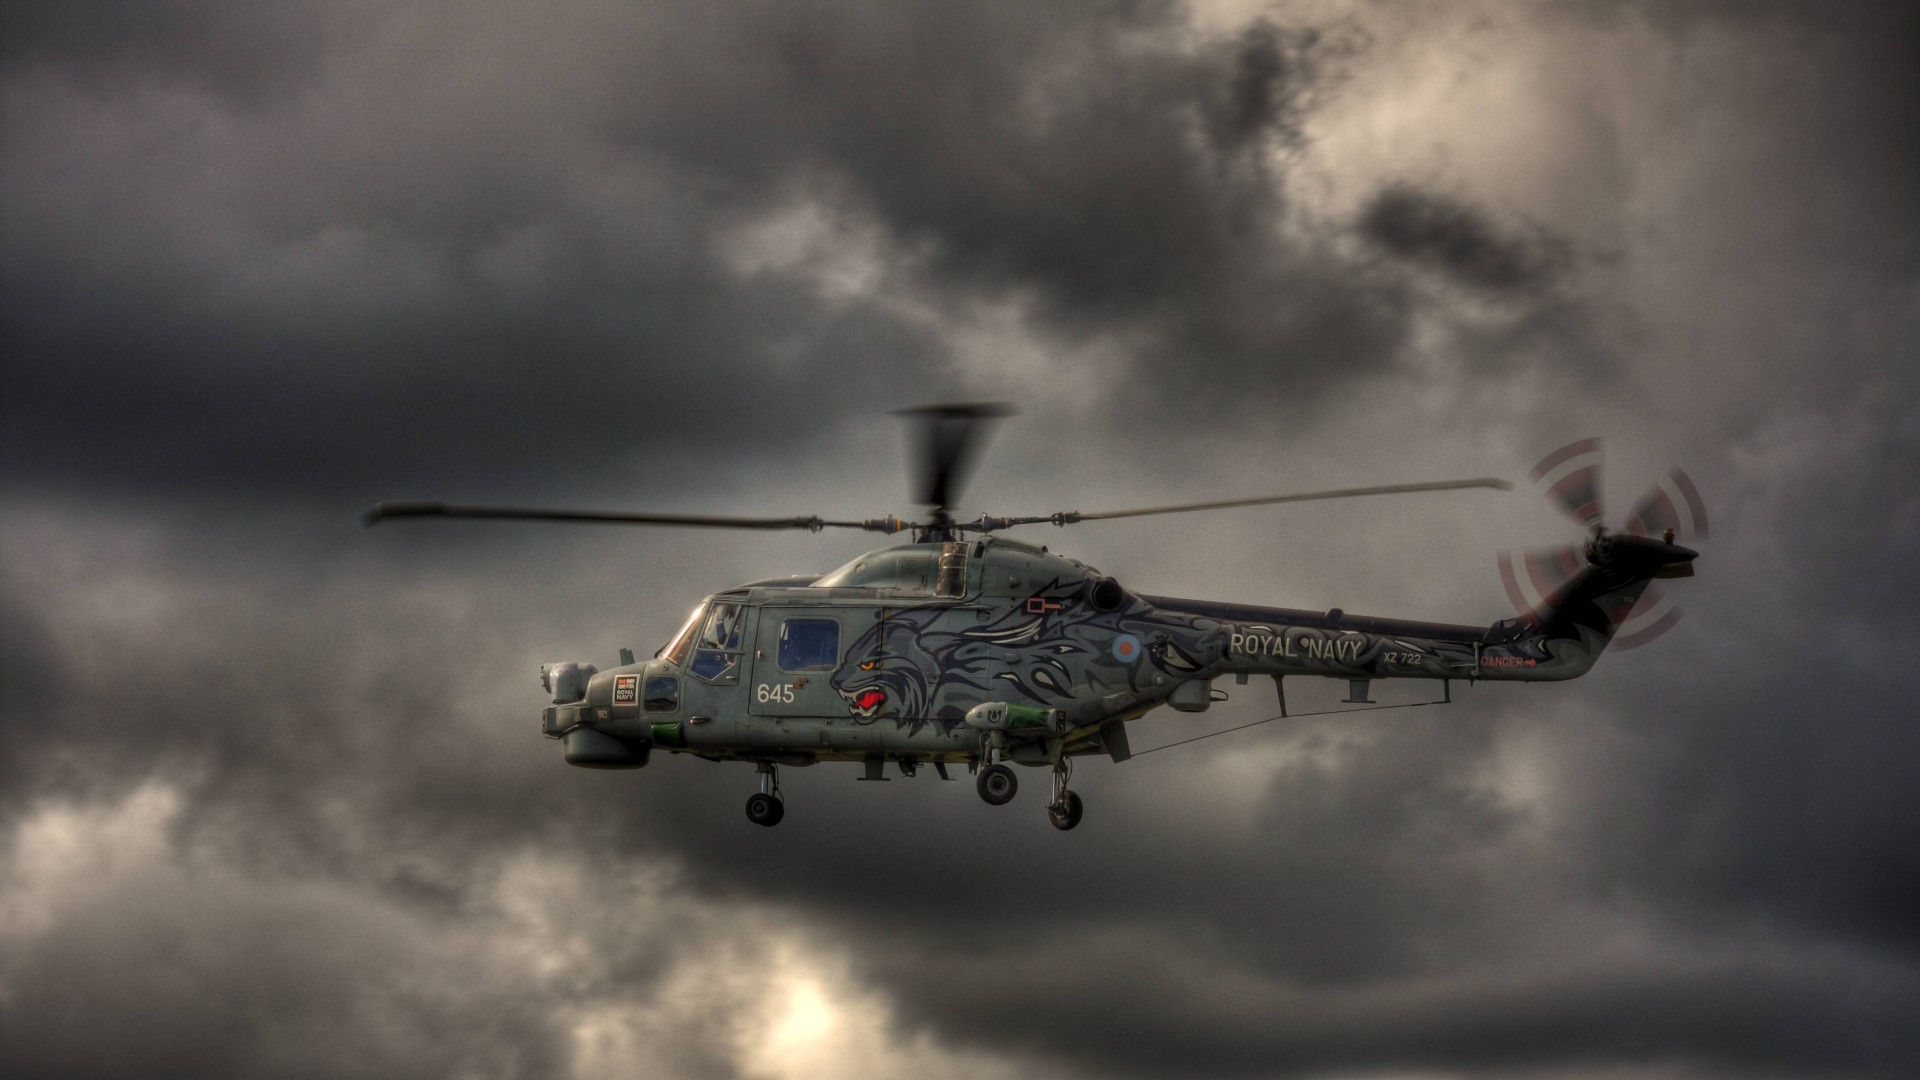 AW139, AgustaWestland, Westland, helicopter, Wild Cat, Royal Navy, flight, sky, clouds (horizontal)